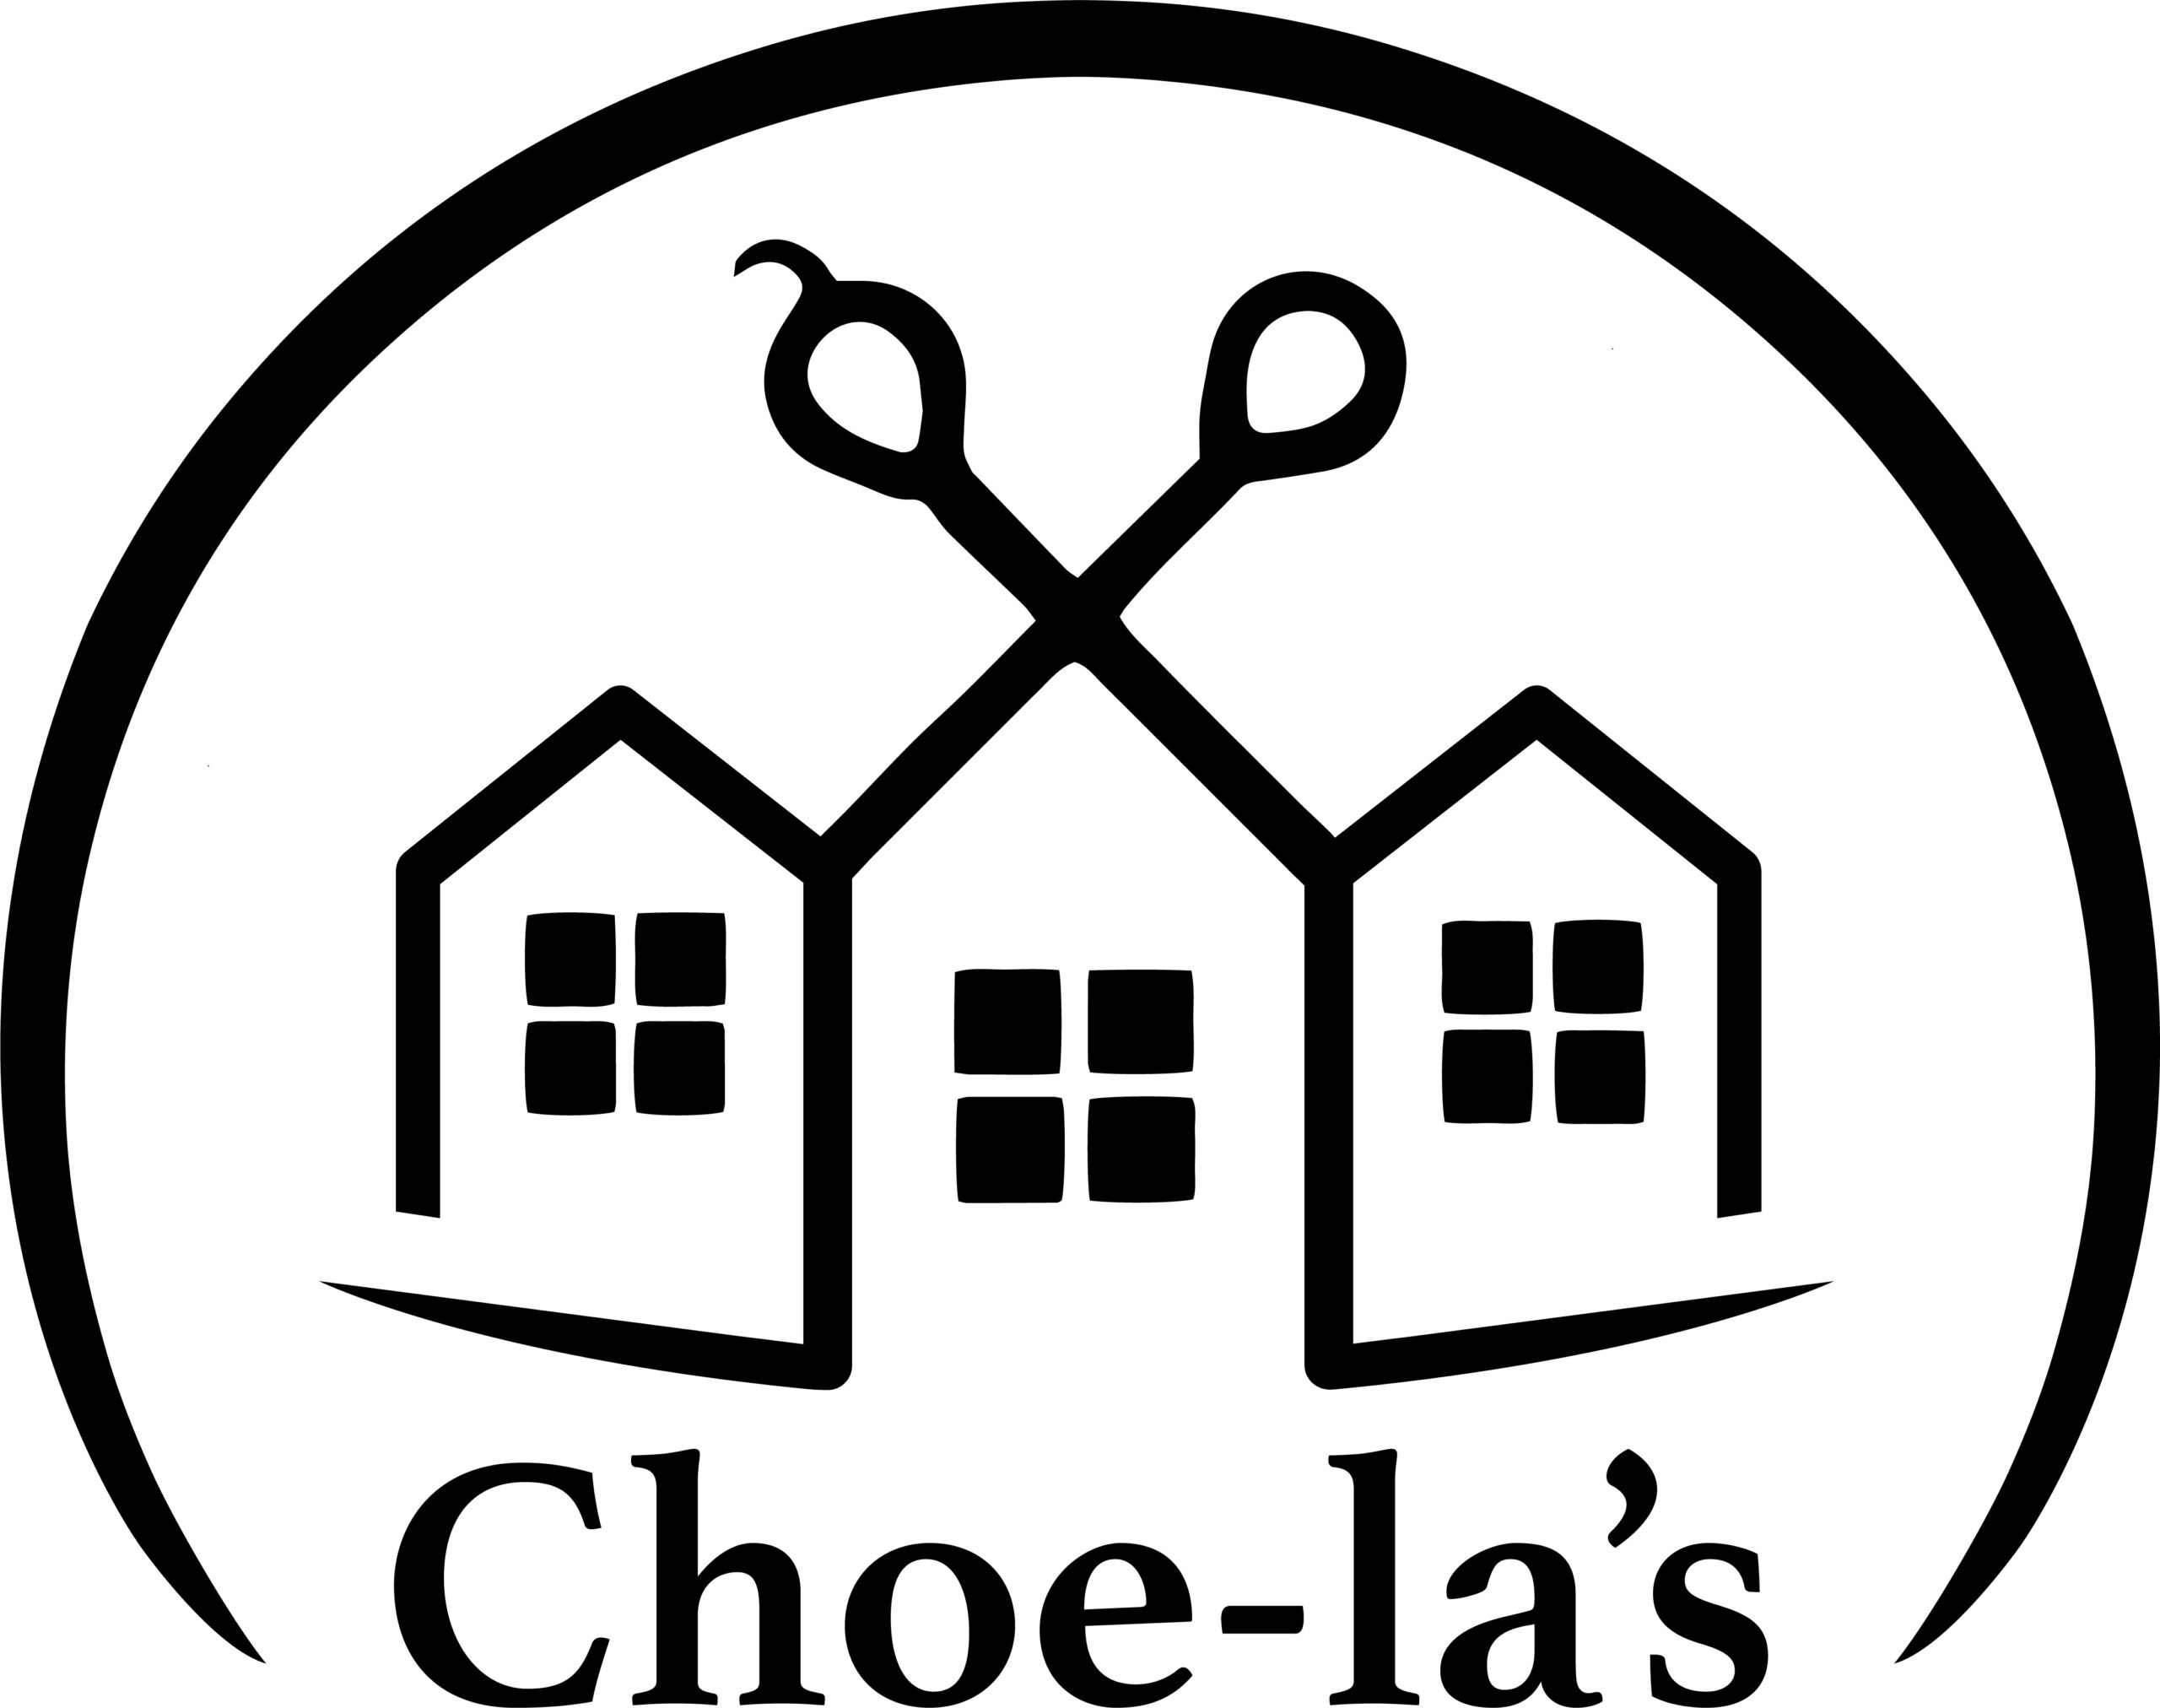 Ik knip thuis.nl: Choe-la's Huis aan huis kapper